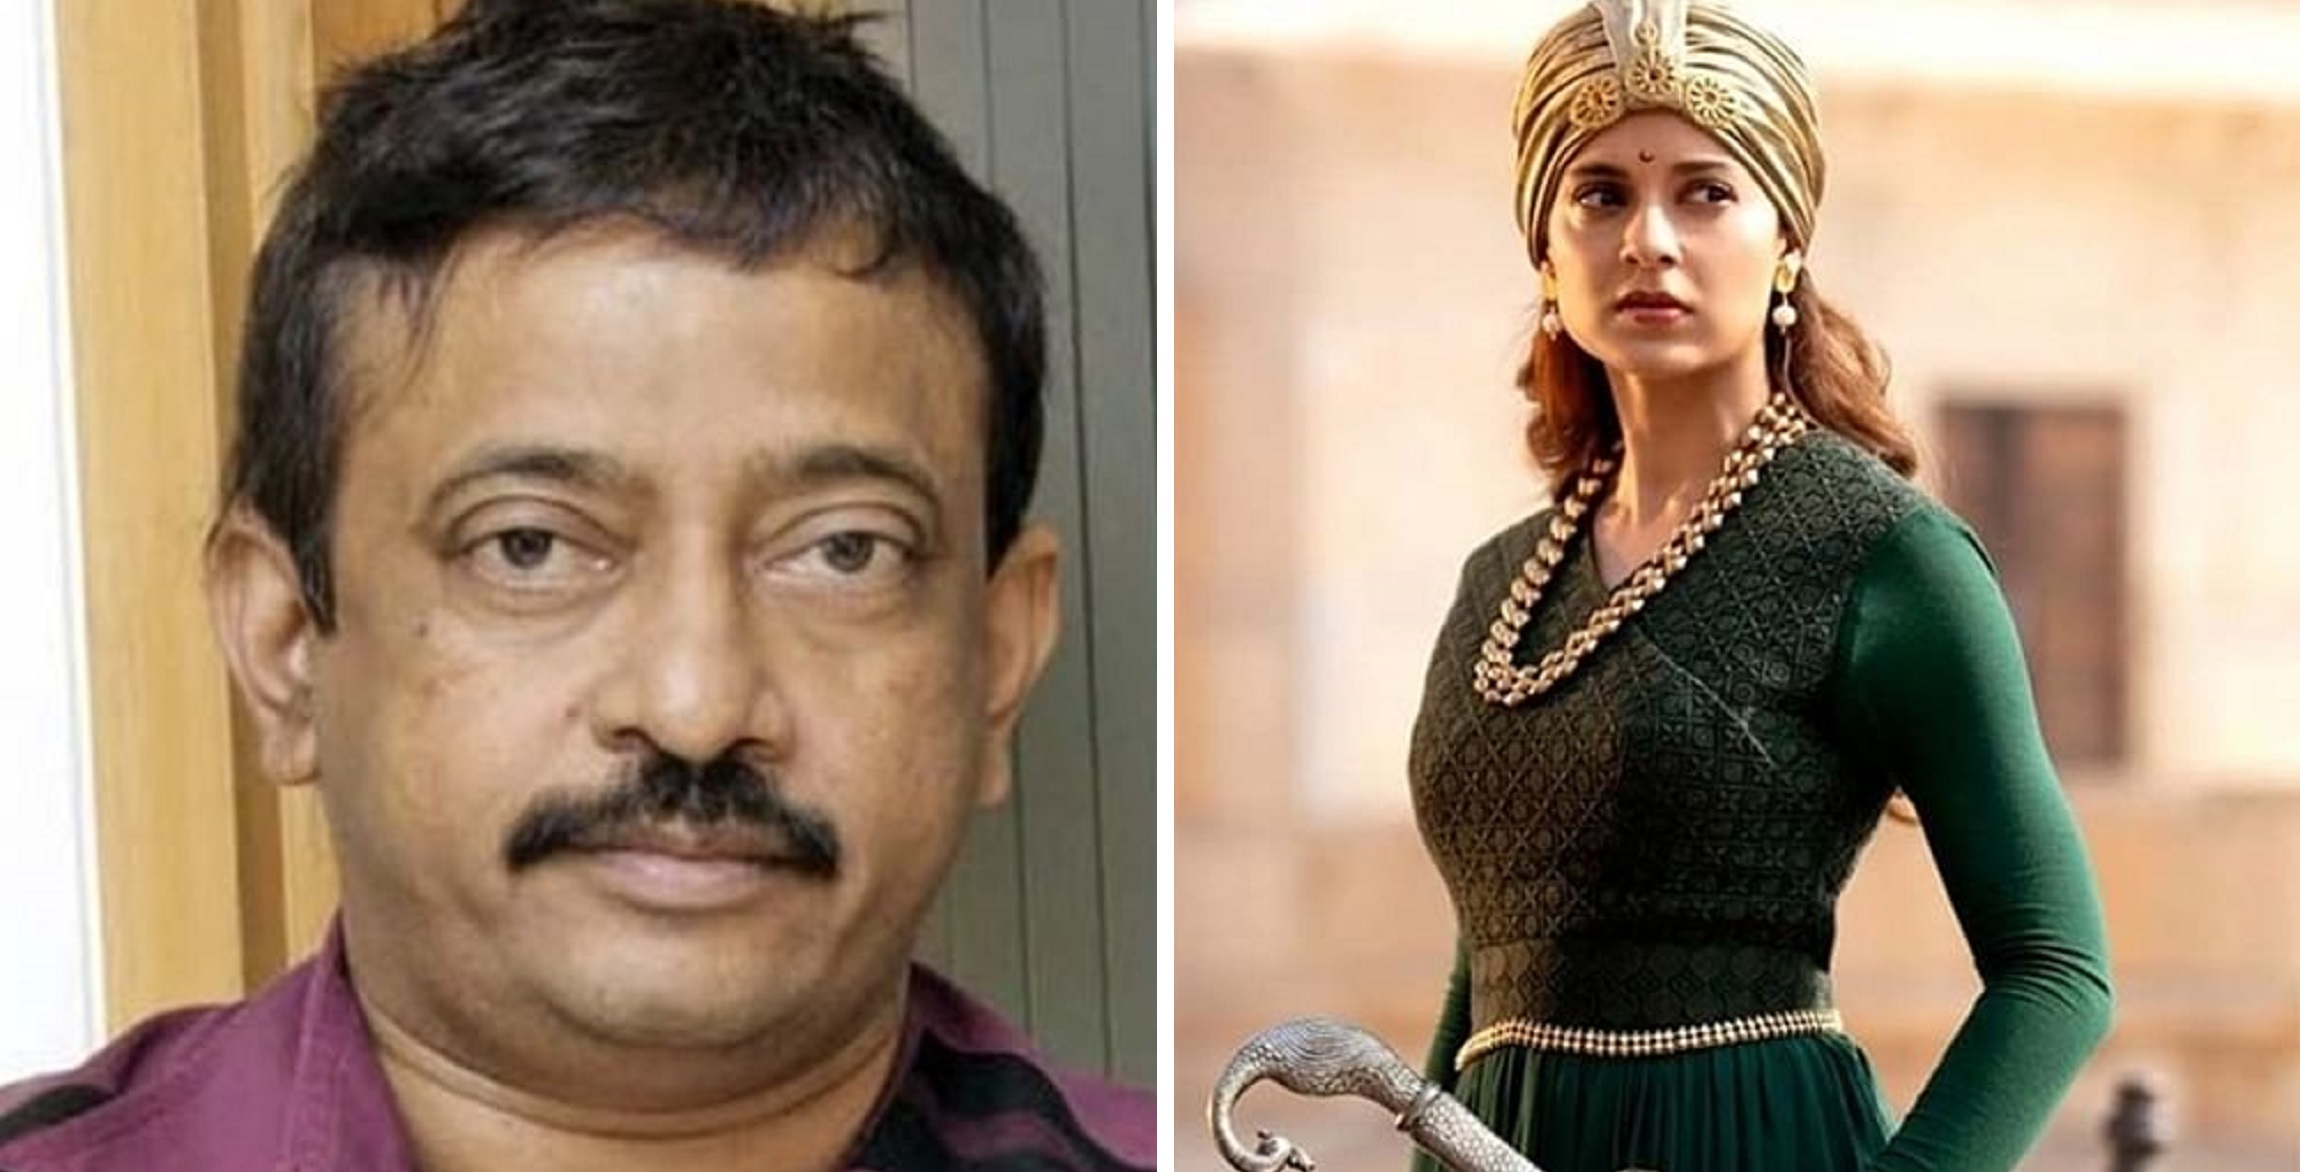 Ram Gopal Varma Says Kangana Ranaut Should “Stick To Films Like Manikarnika”, While Commenting On Her Film ‘Thalaivi’